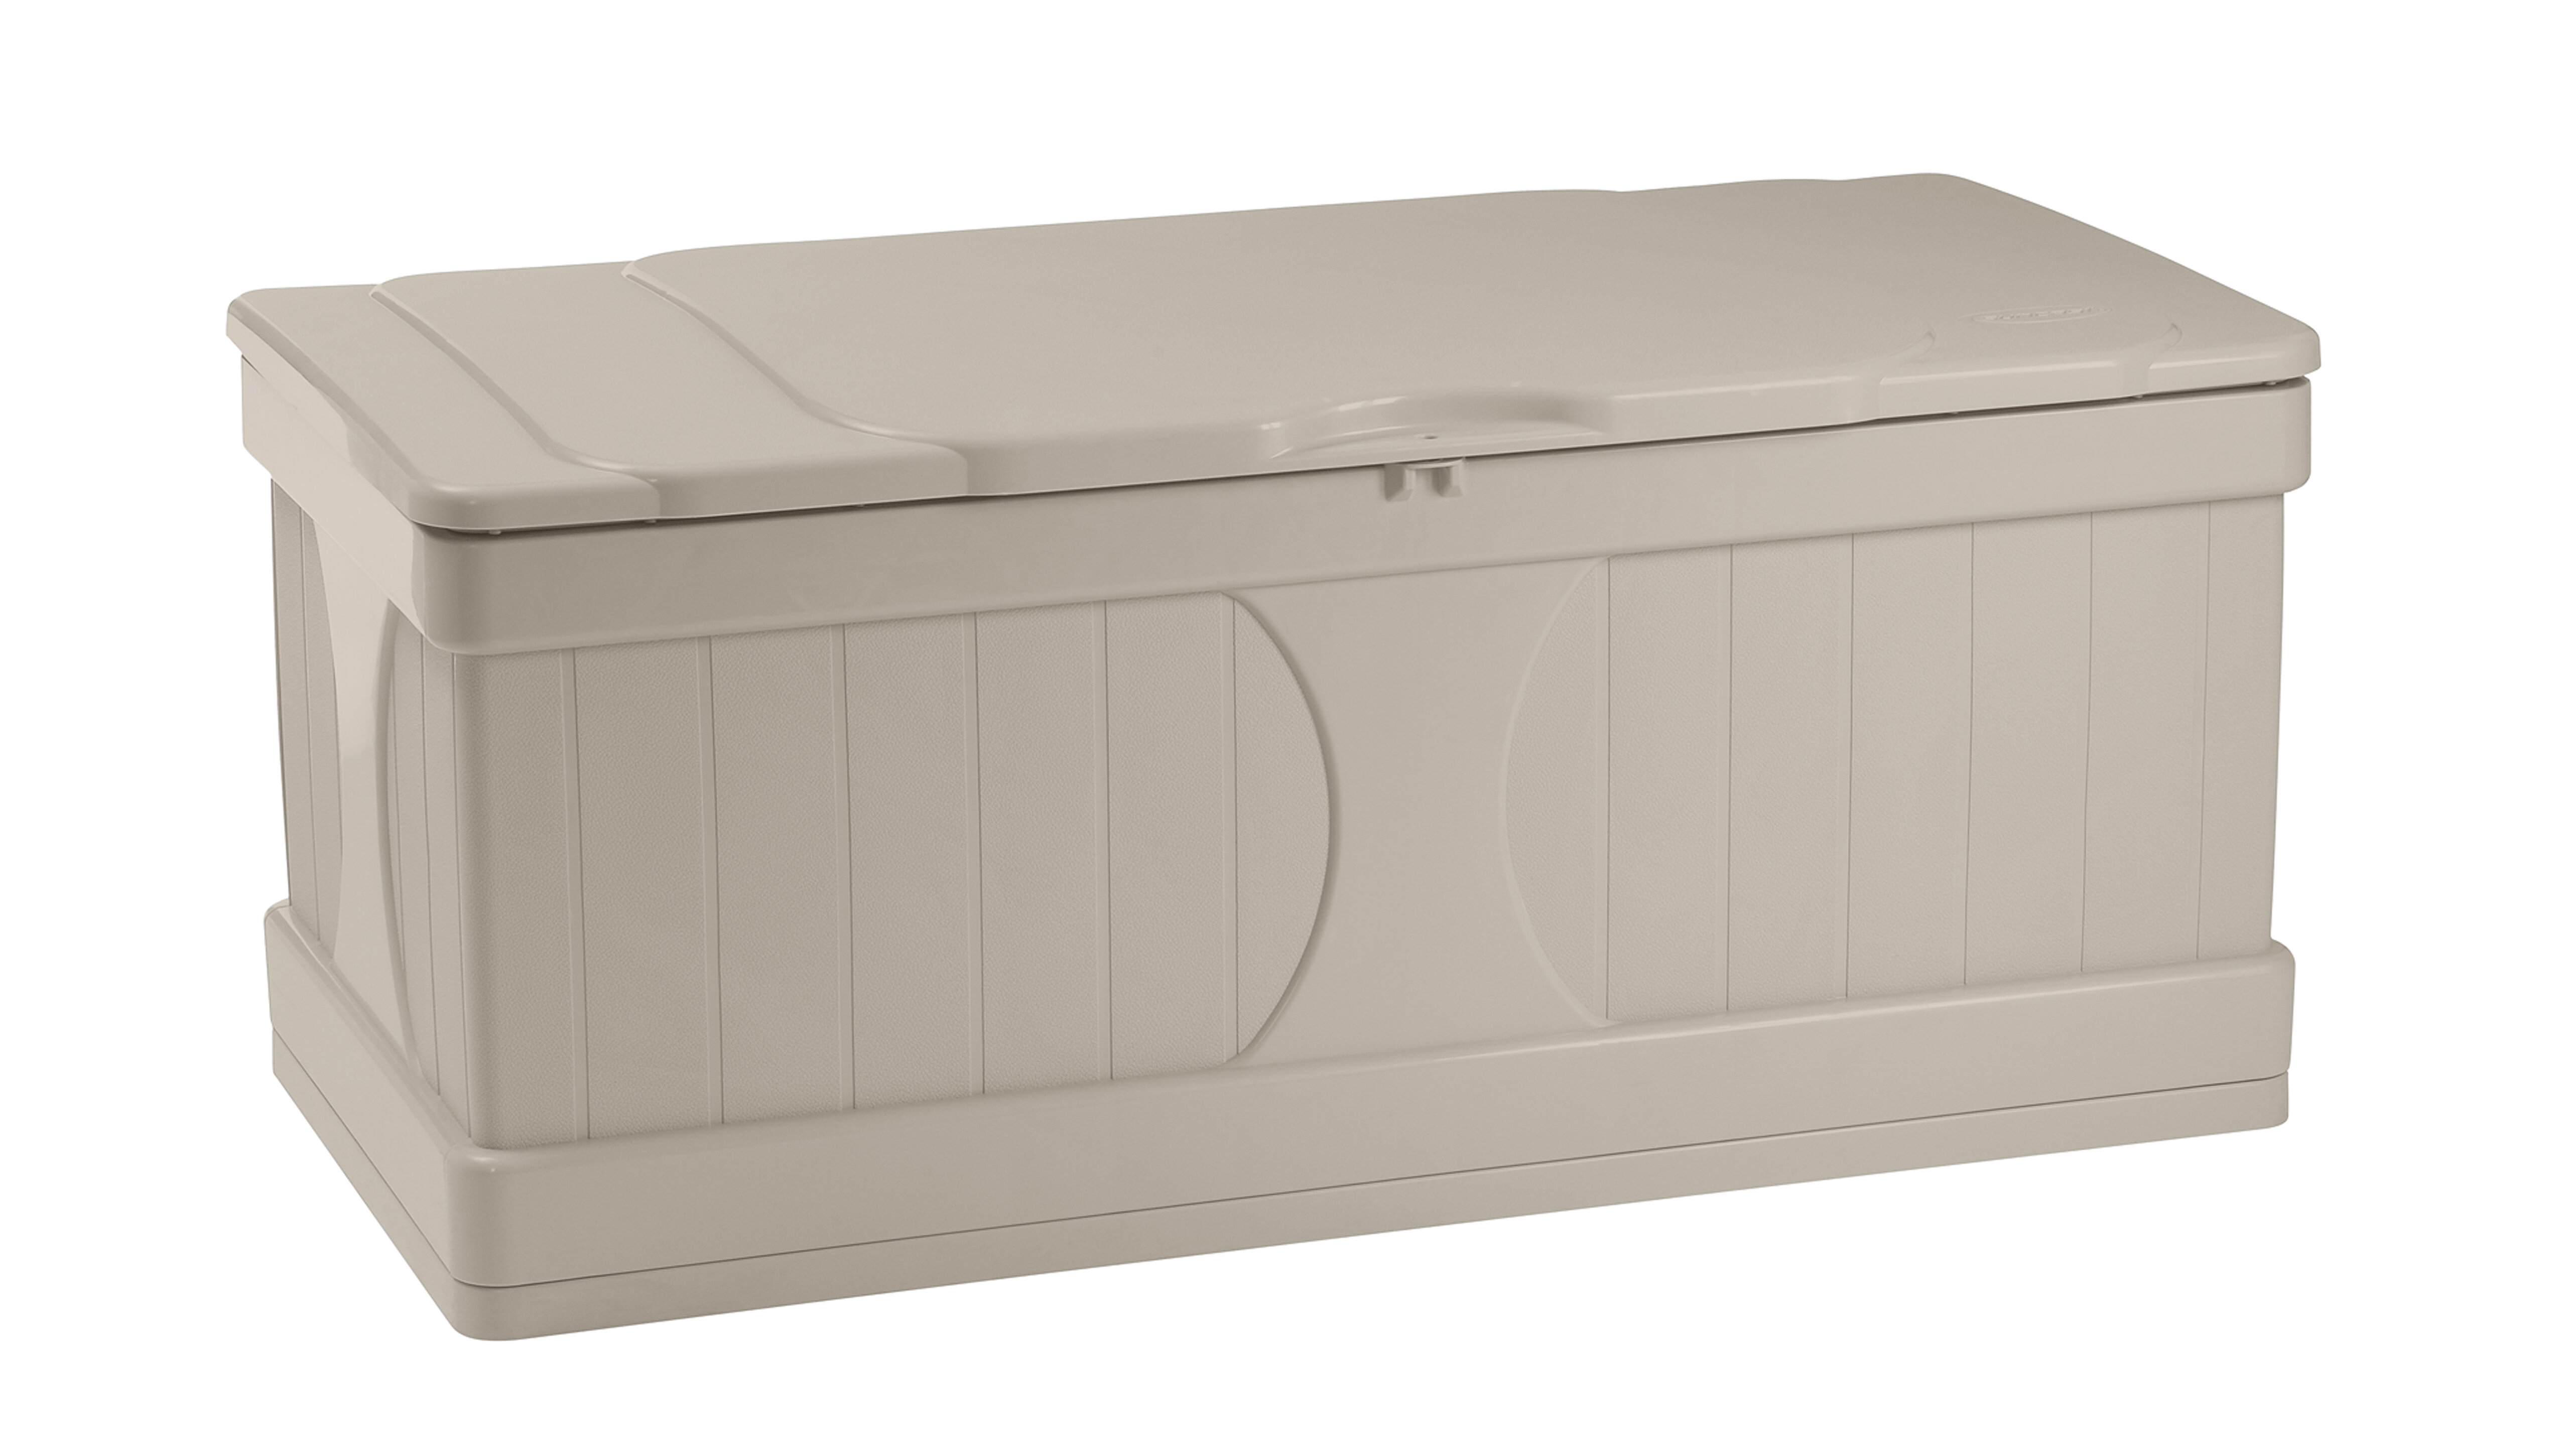 Suncast 50-Gallon Outdoor Resin Patio Deck Storage Box with Seat,  Peppercorn